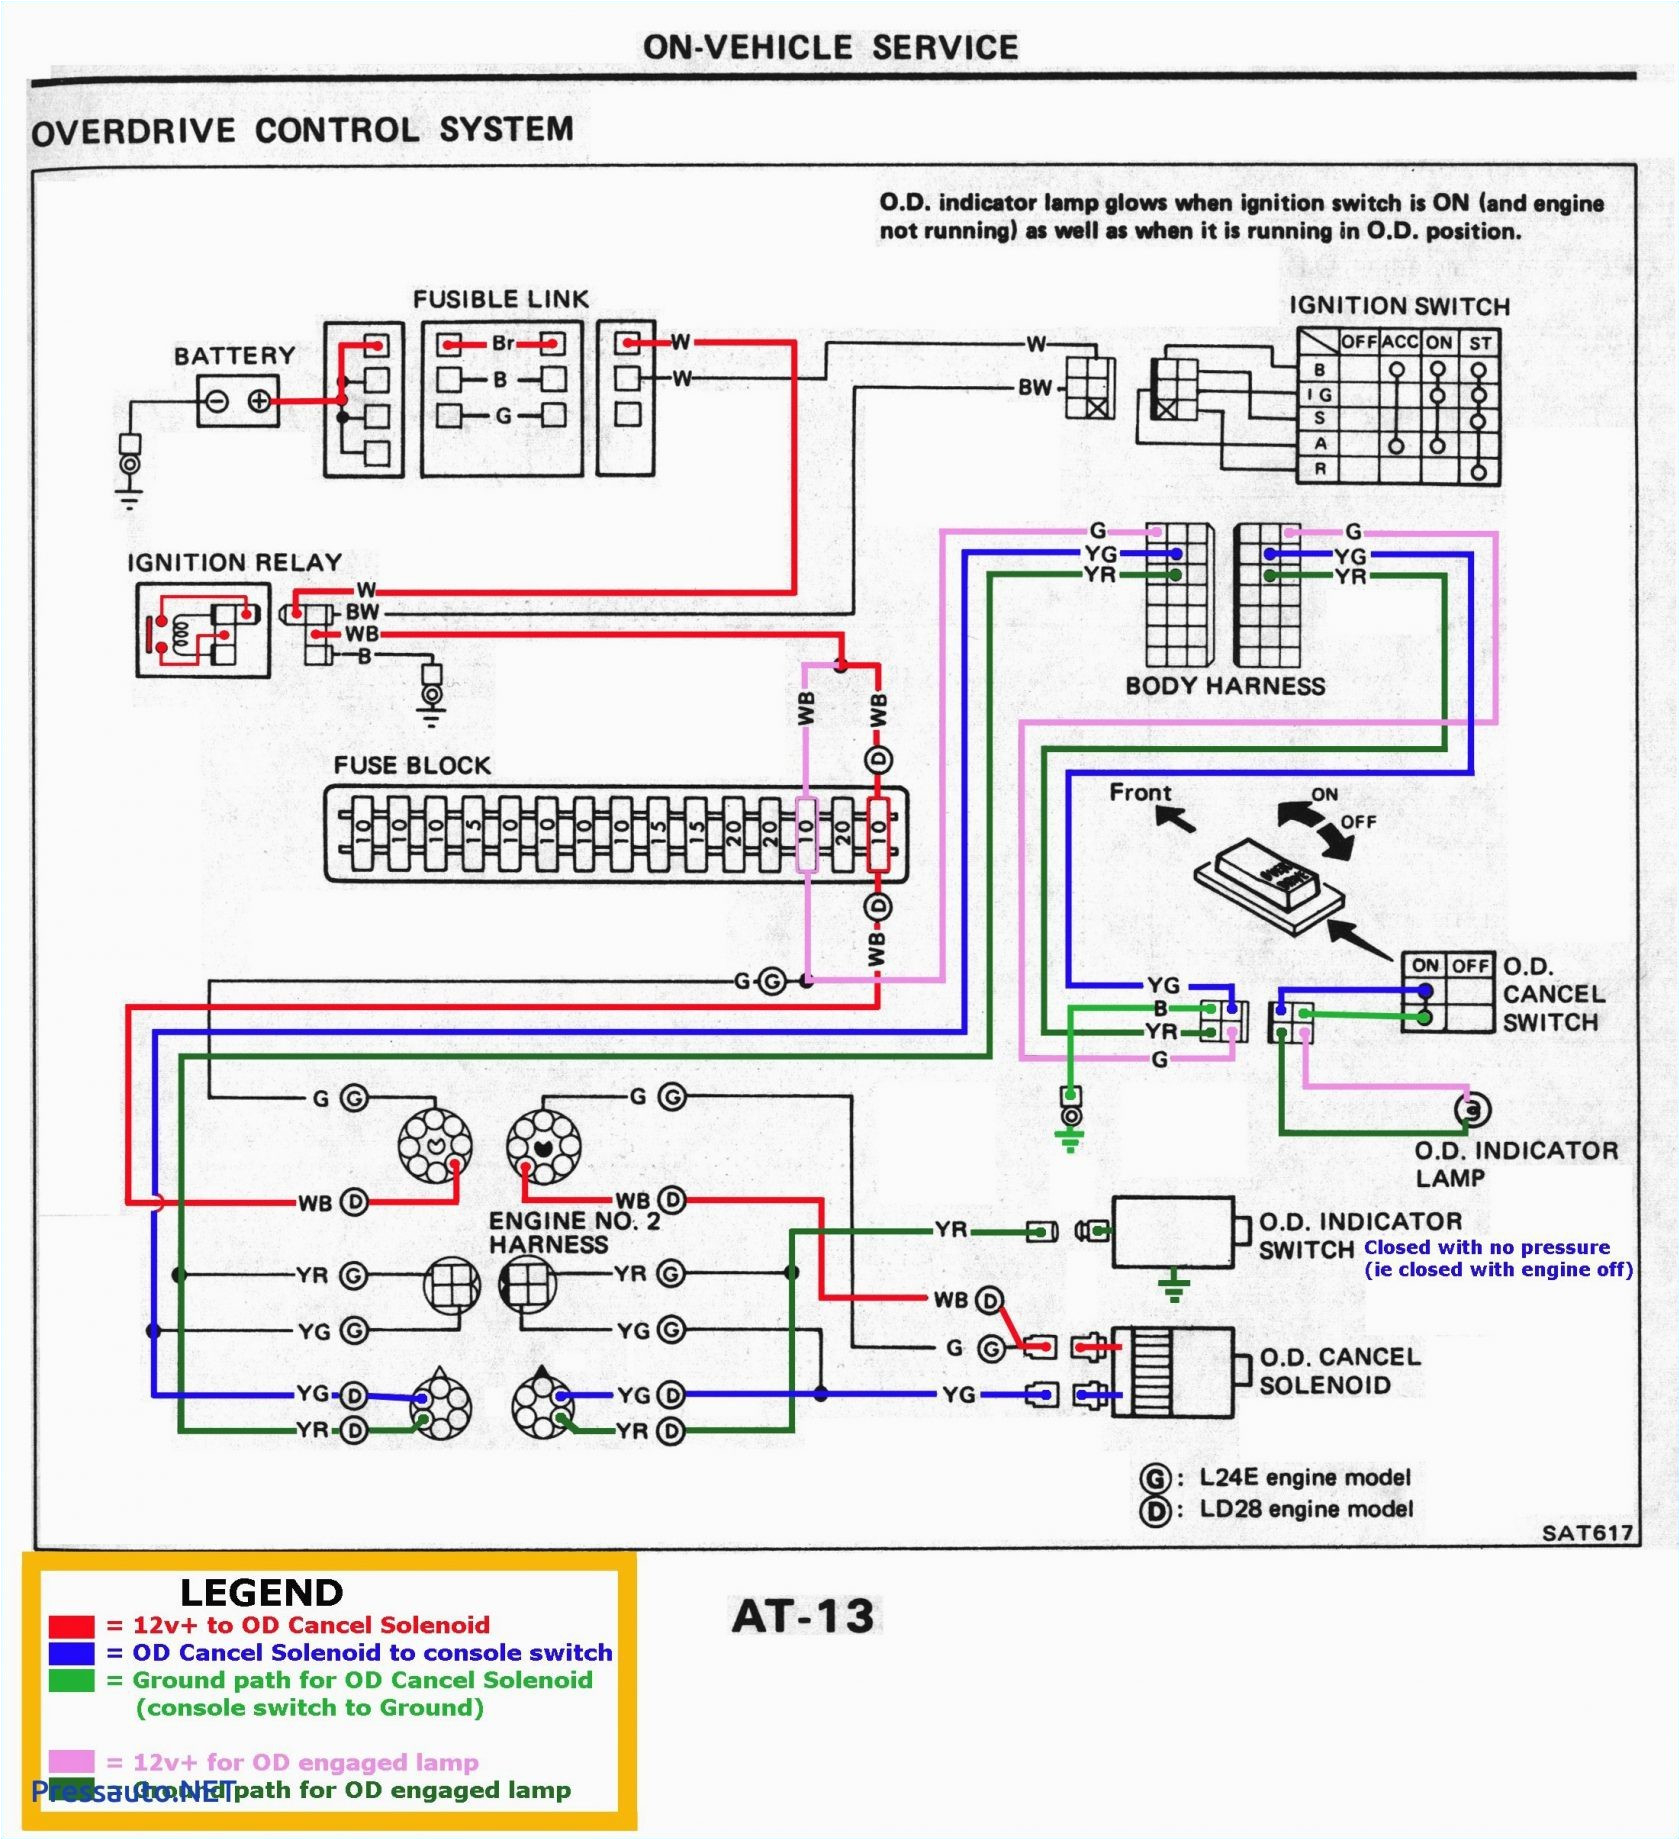 wiring diagram 2005 chevy silverado 1500 fuel system likewise photos wiring diagram also 2001 chevy silverado fuel pump likewise 1998 dodge